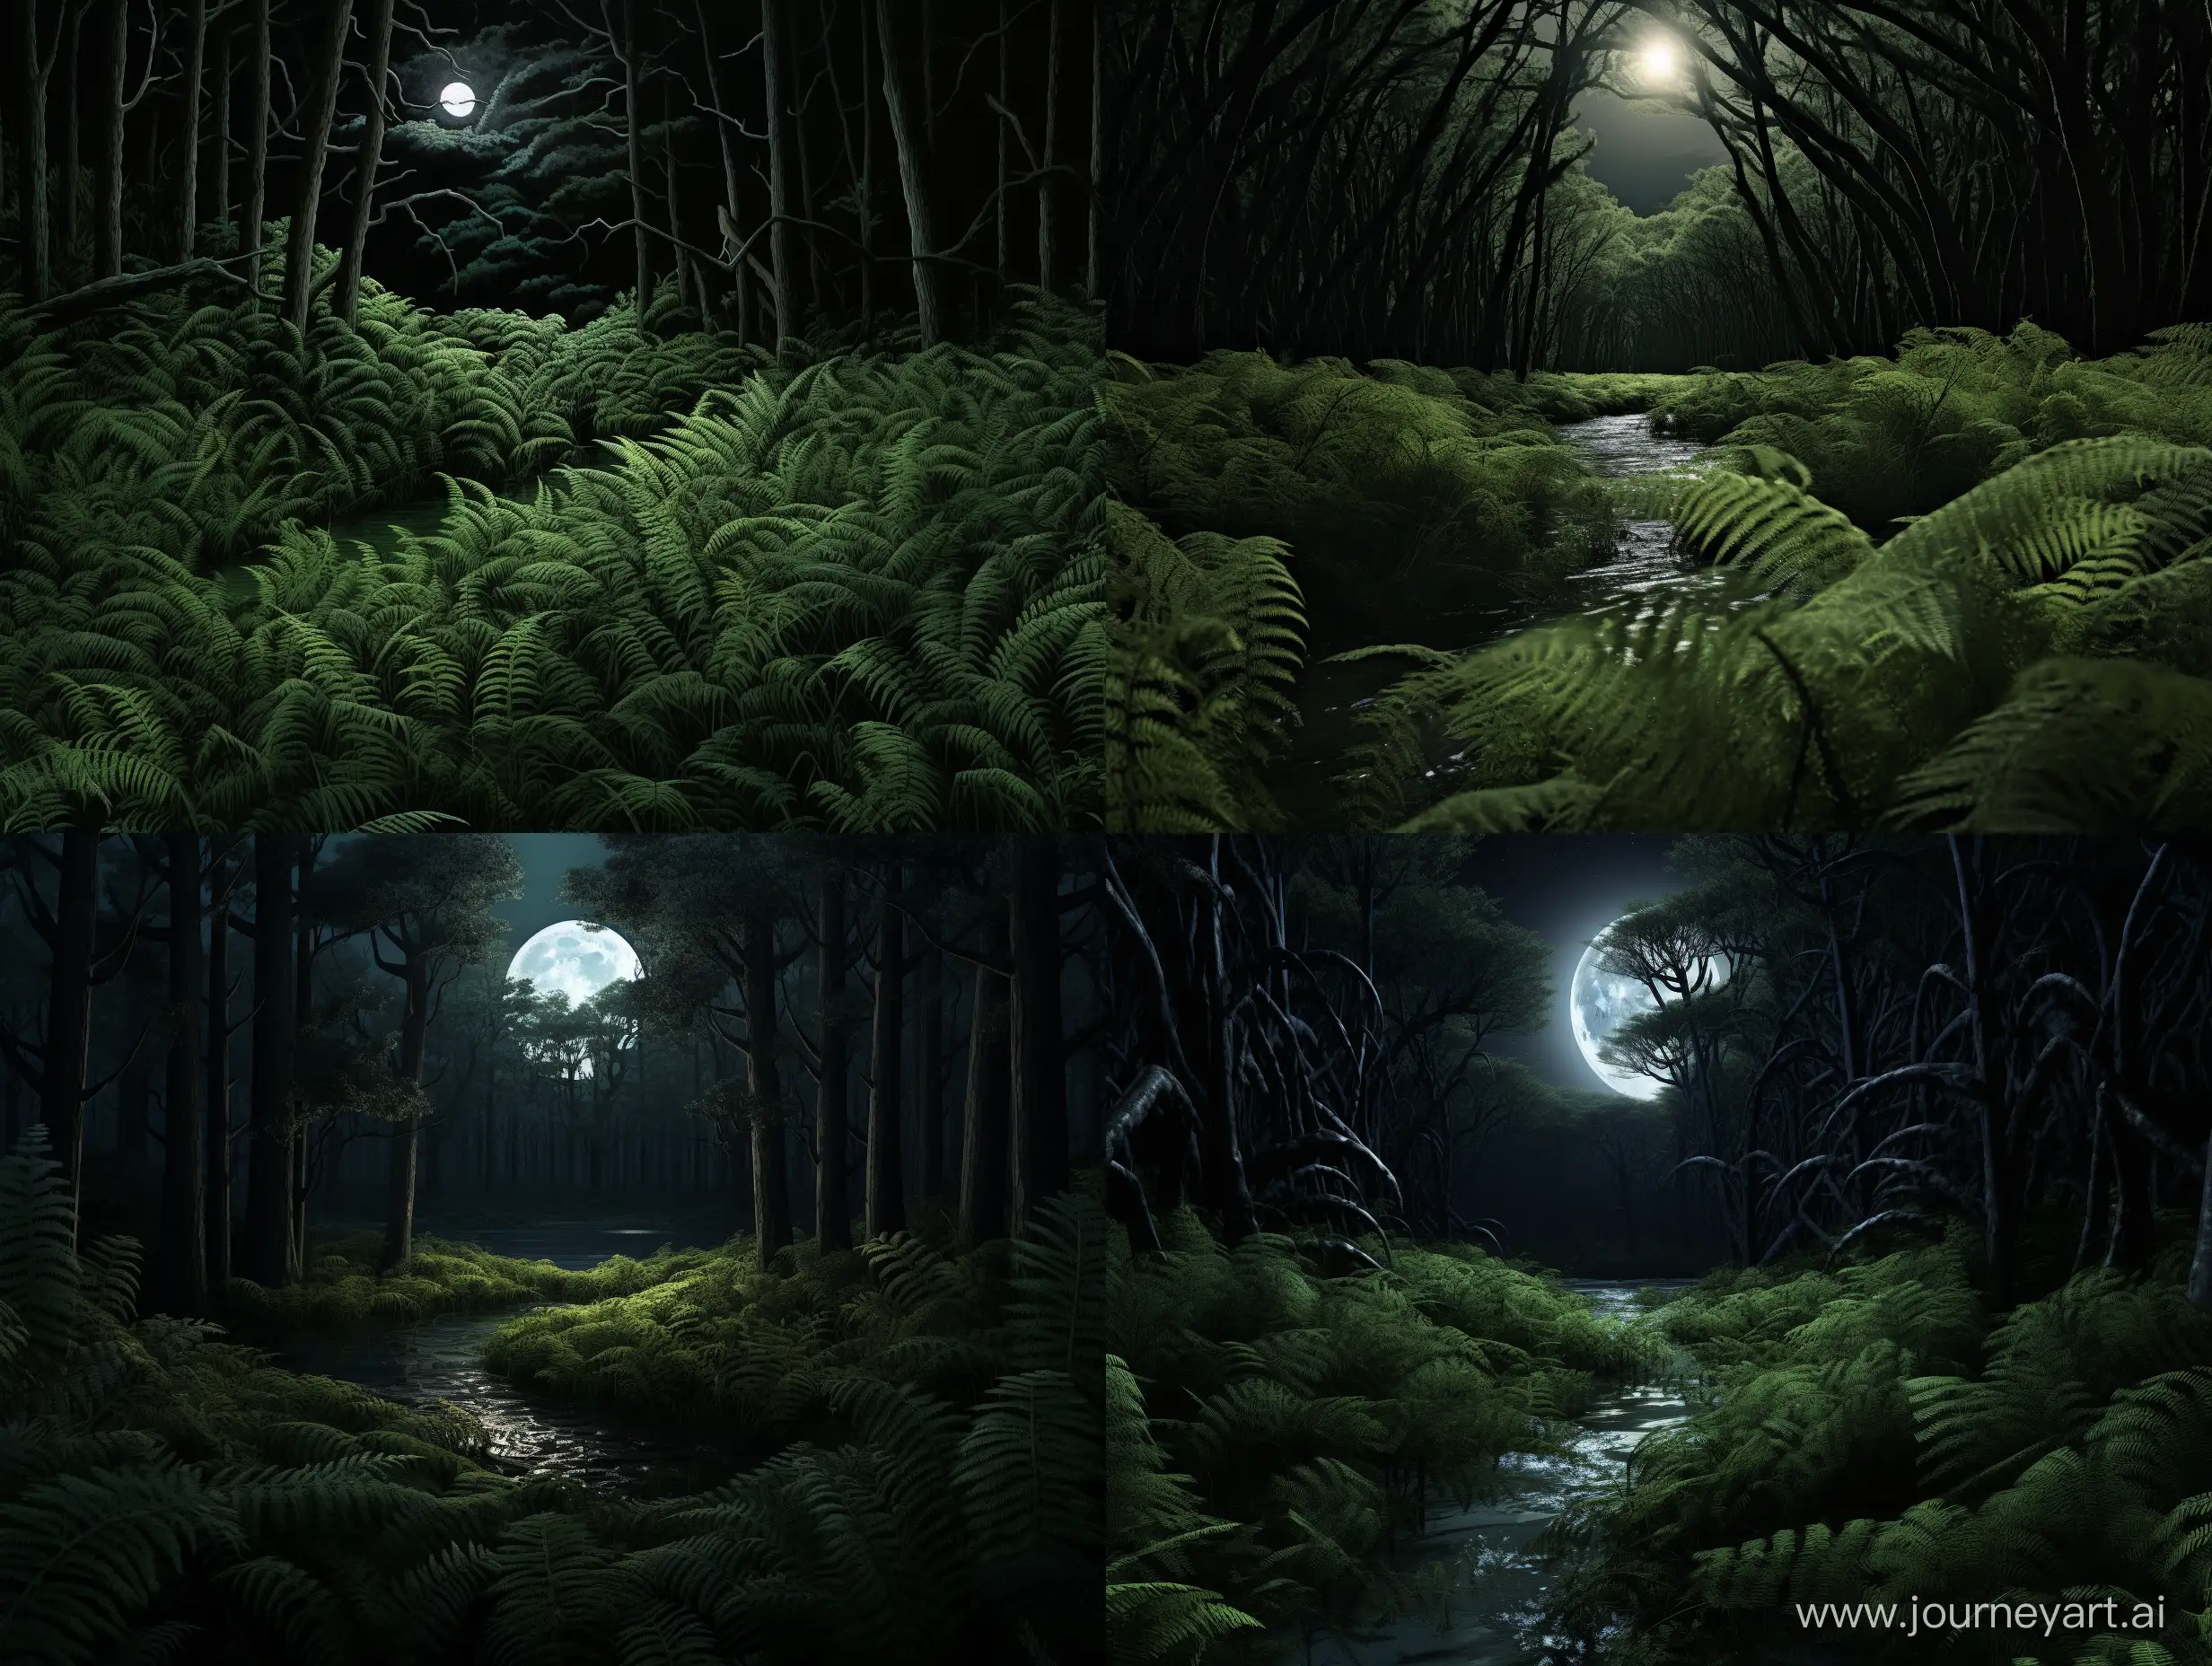 Enchanting-Fern-Carpet-under-Moonlit-Pine-Forest-Canopy